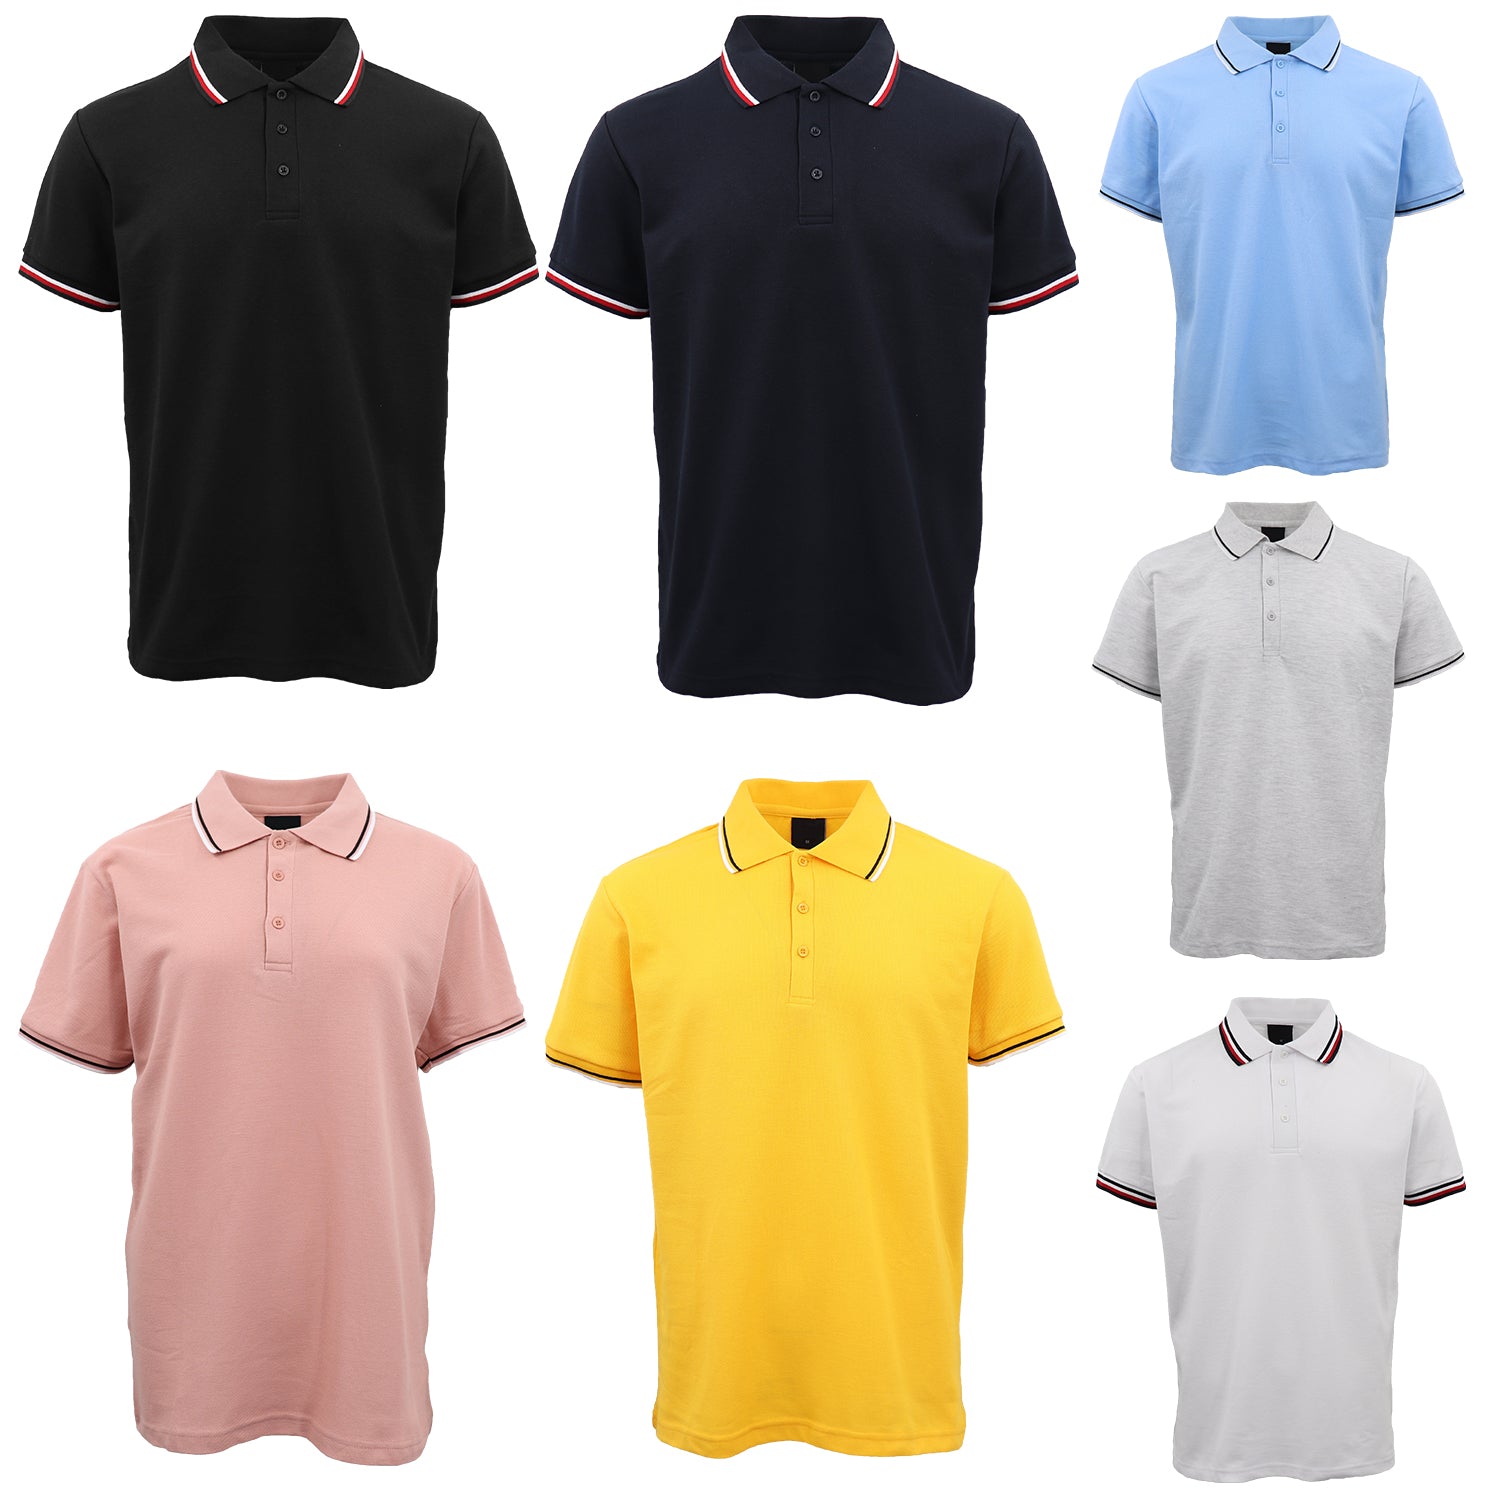 Men's Unisex Polo Shirts Basic Plain Breathable Tops Cotton Cascual Sport Shorts, Black, S